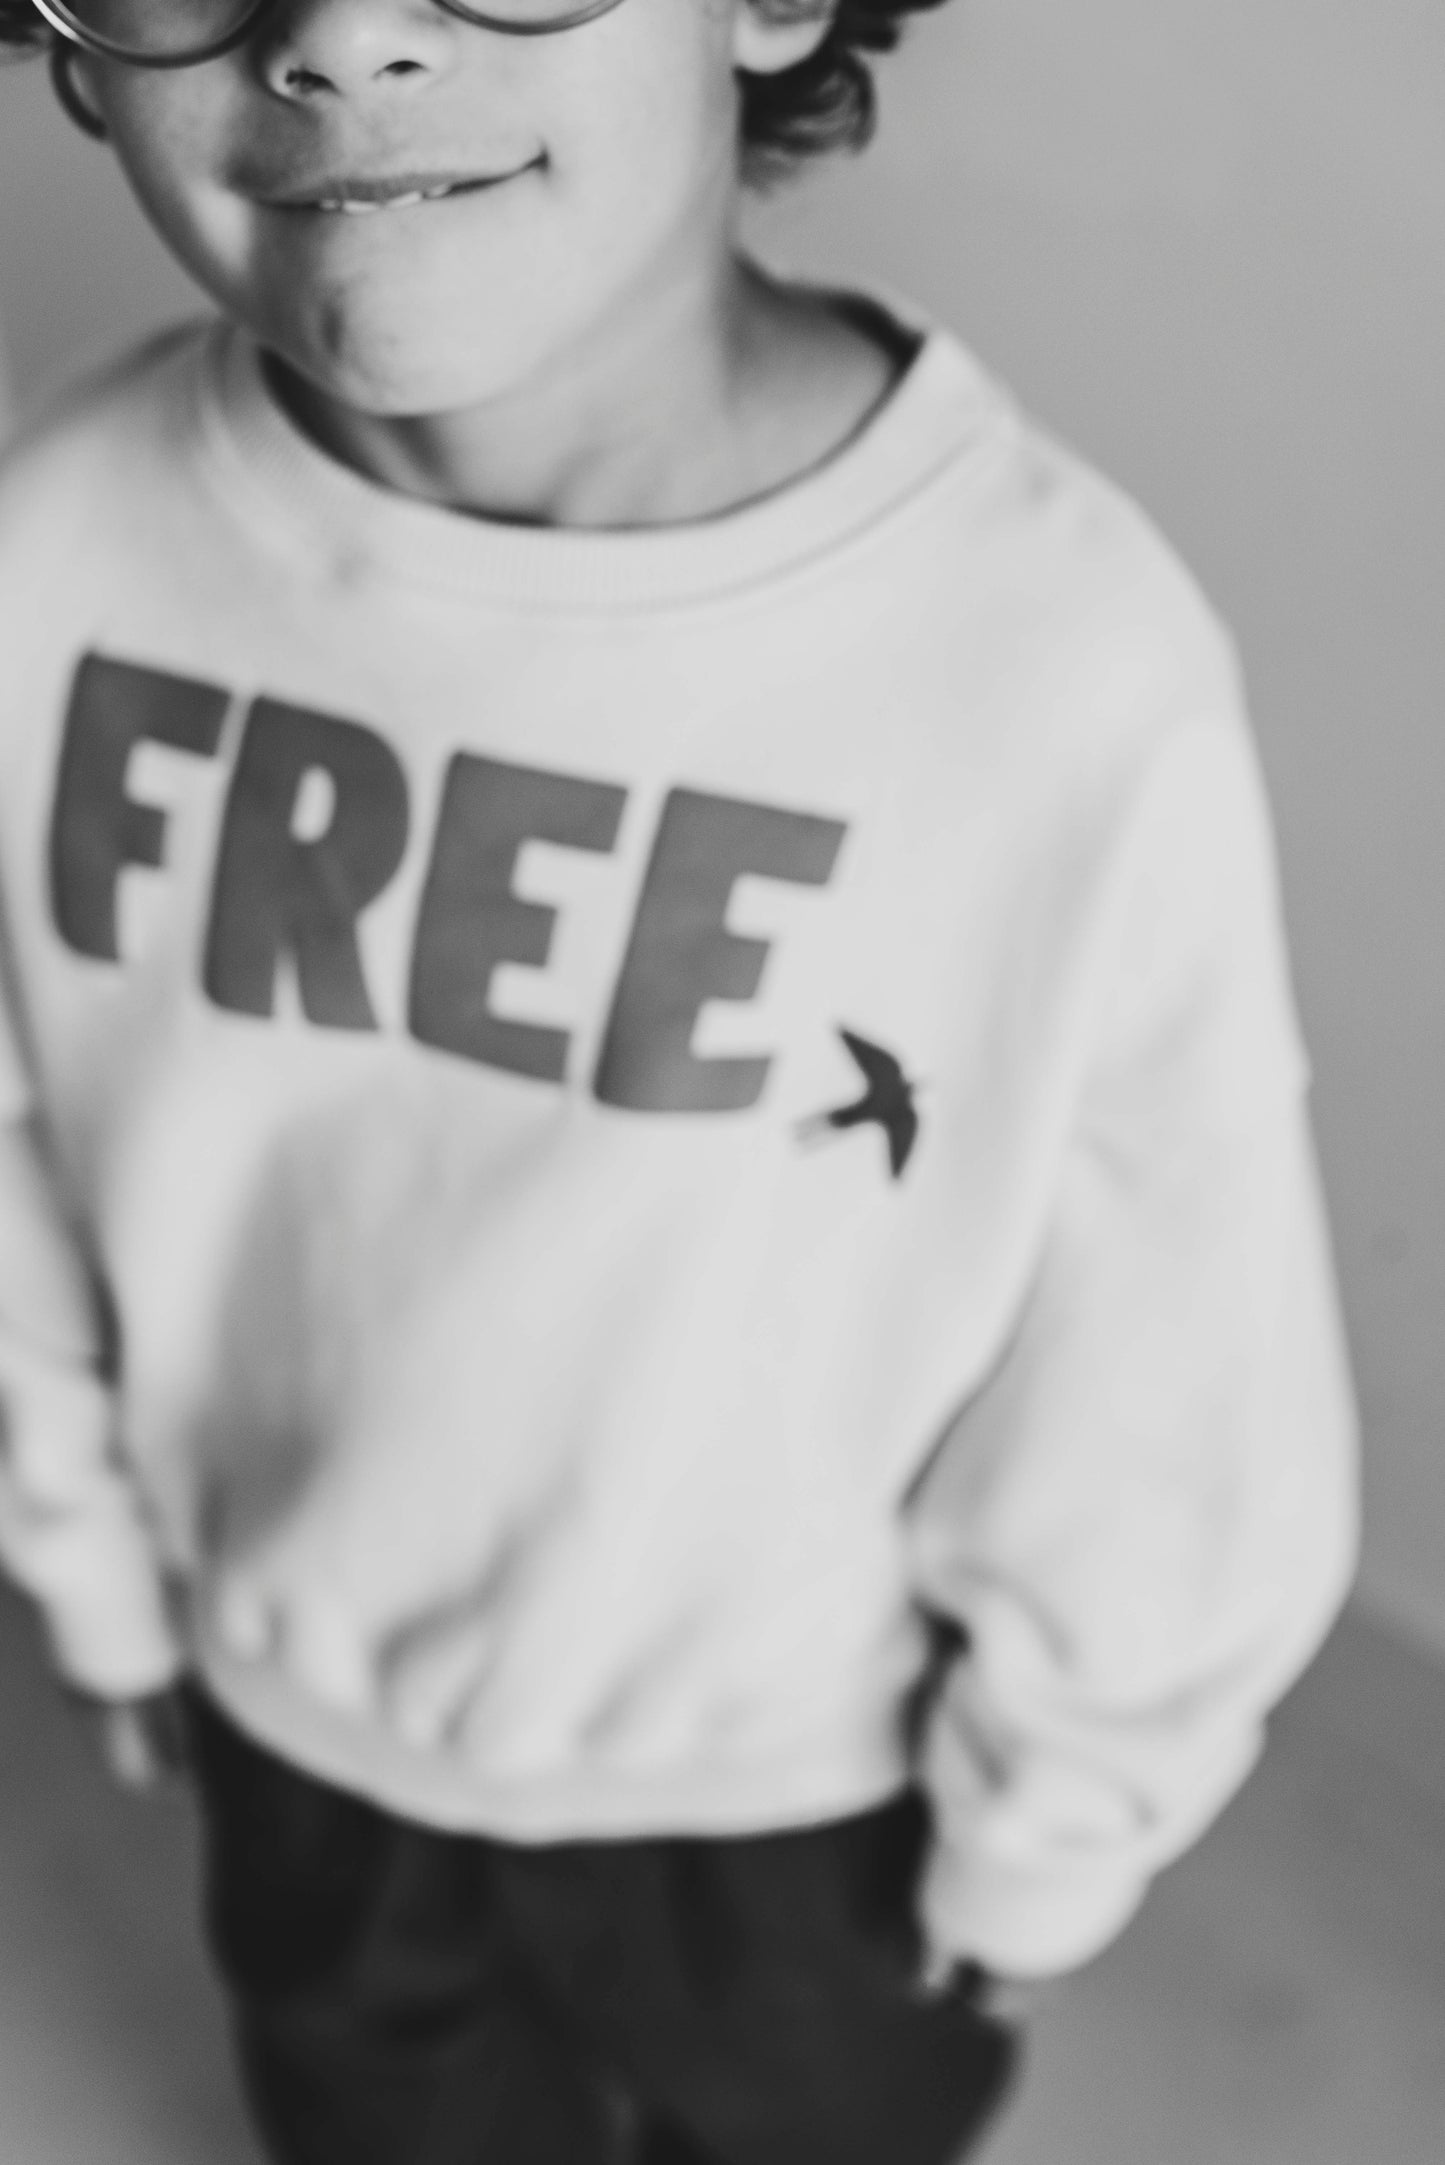 Free bird - sweater